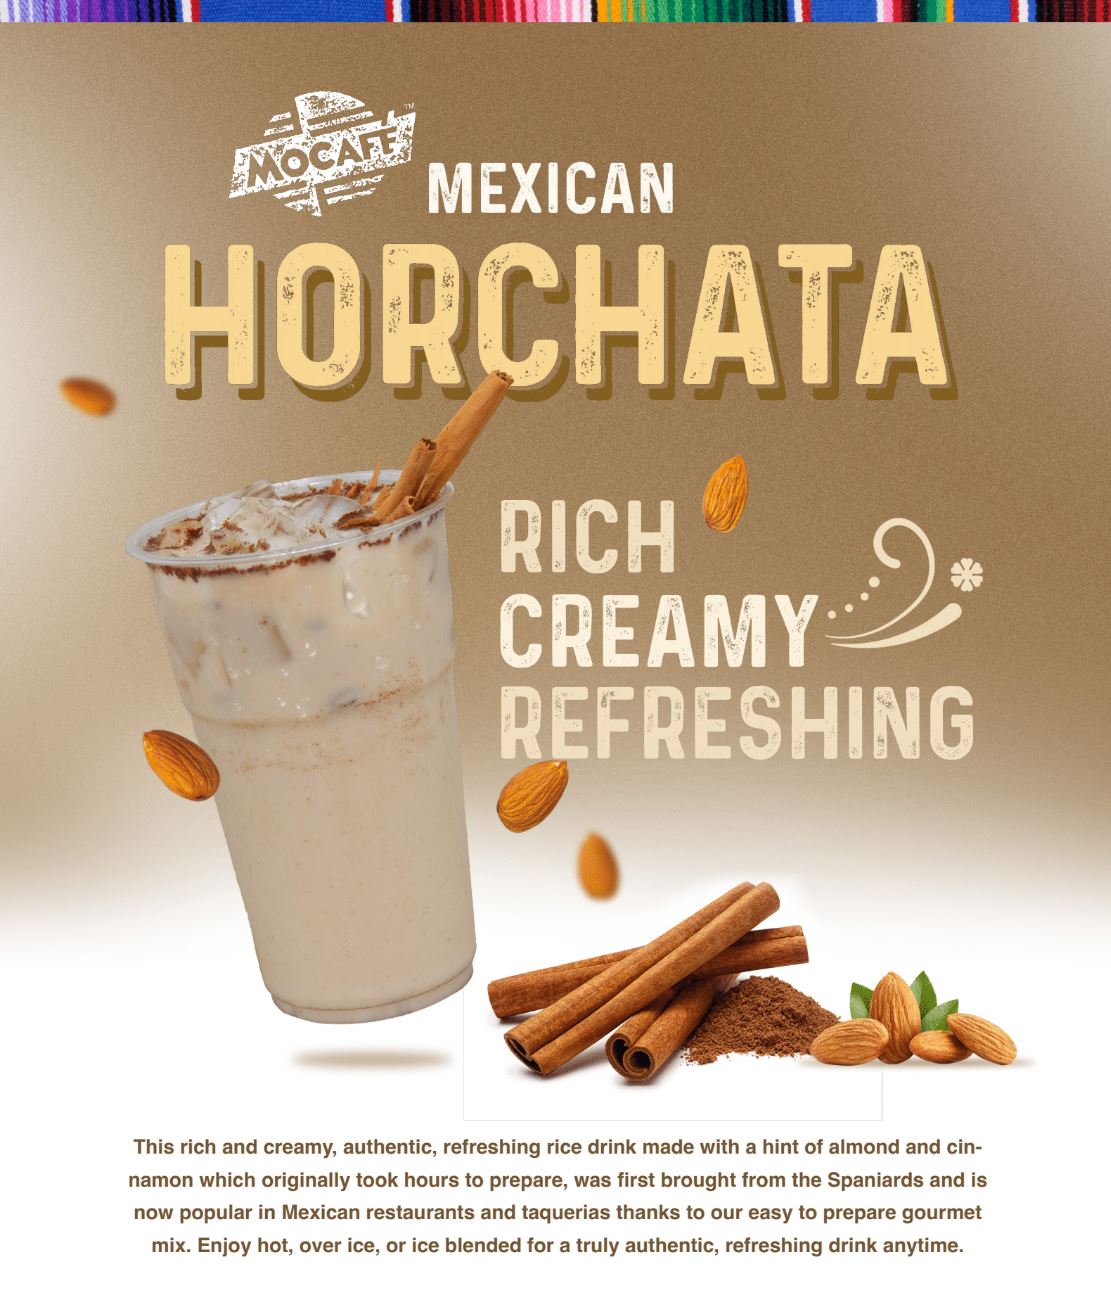 MoCafe - Mexican Horchata - 3lb Bulk Bag